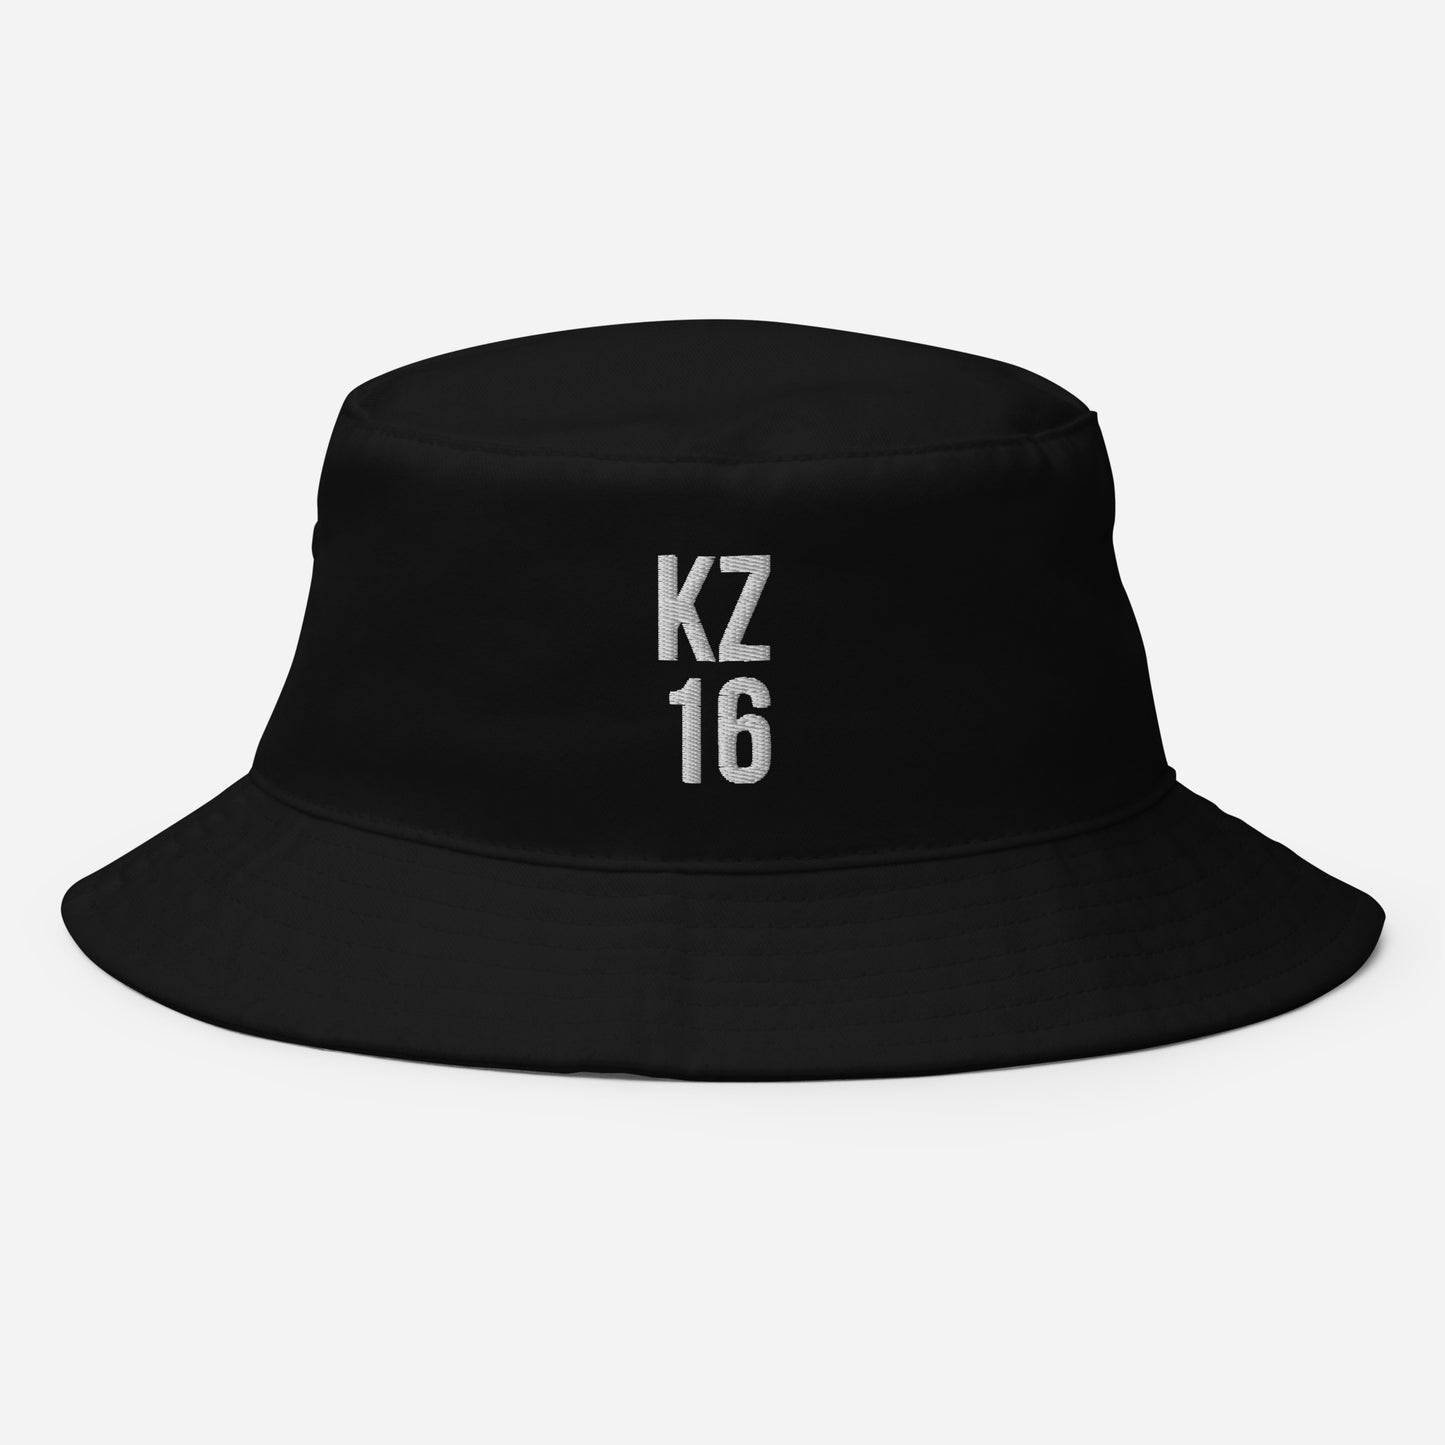 KZ 16 Bucket Hat